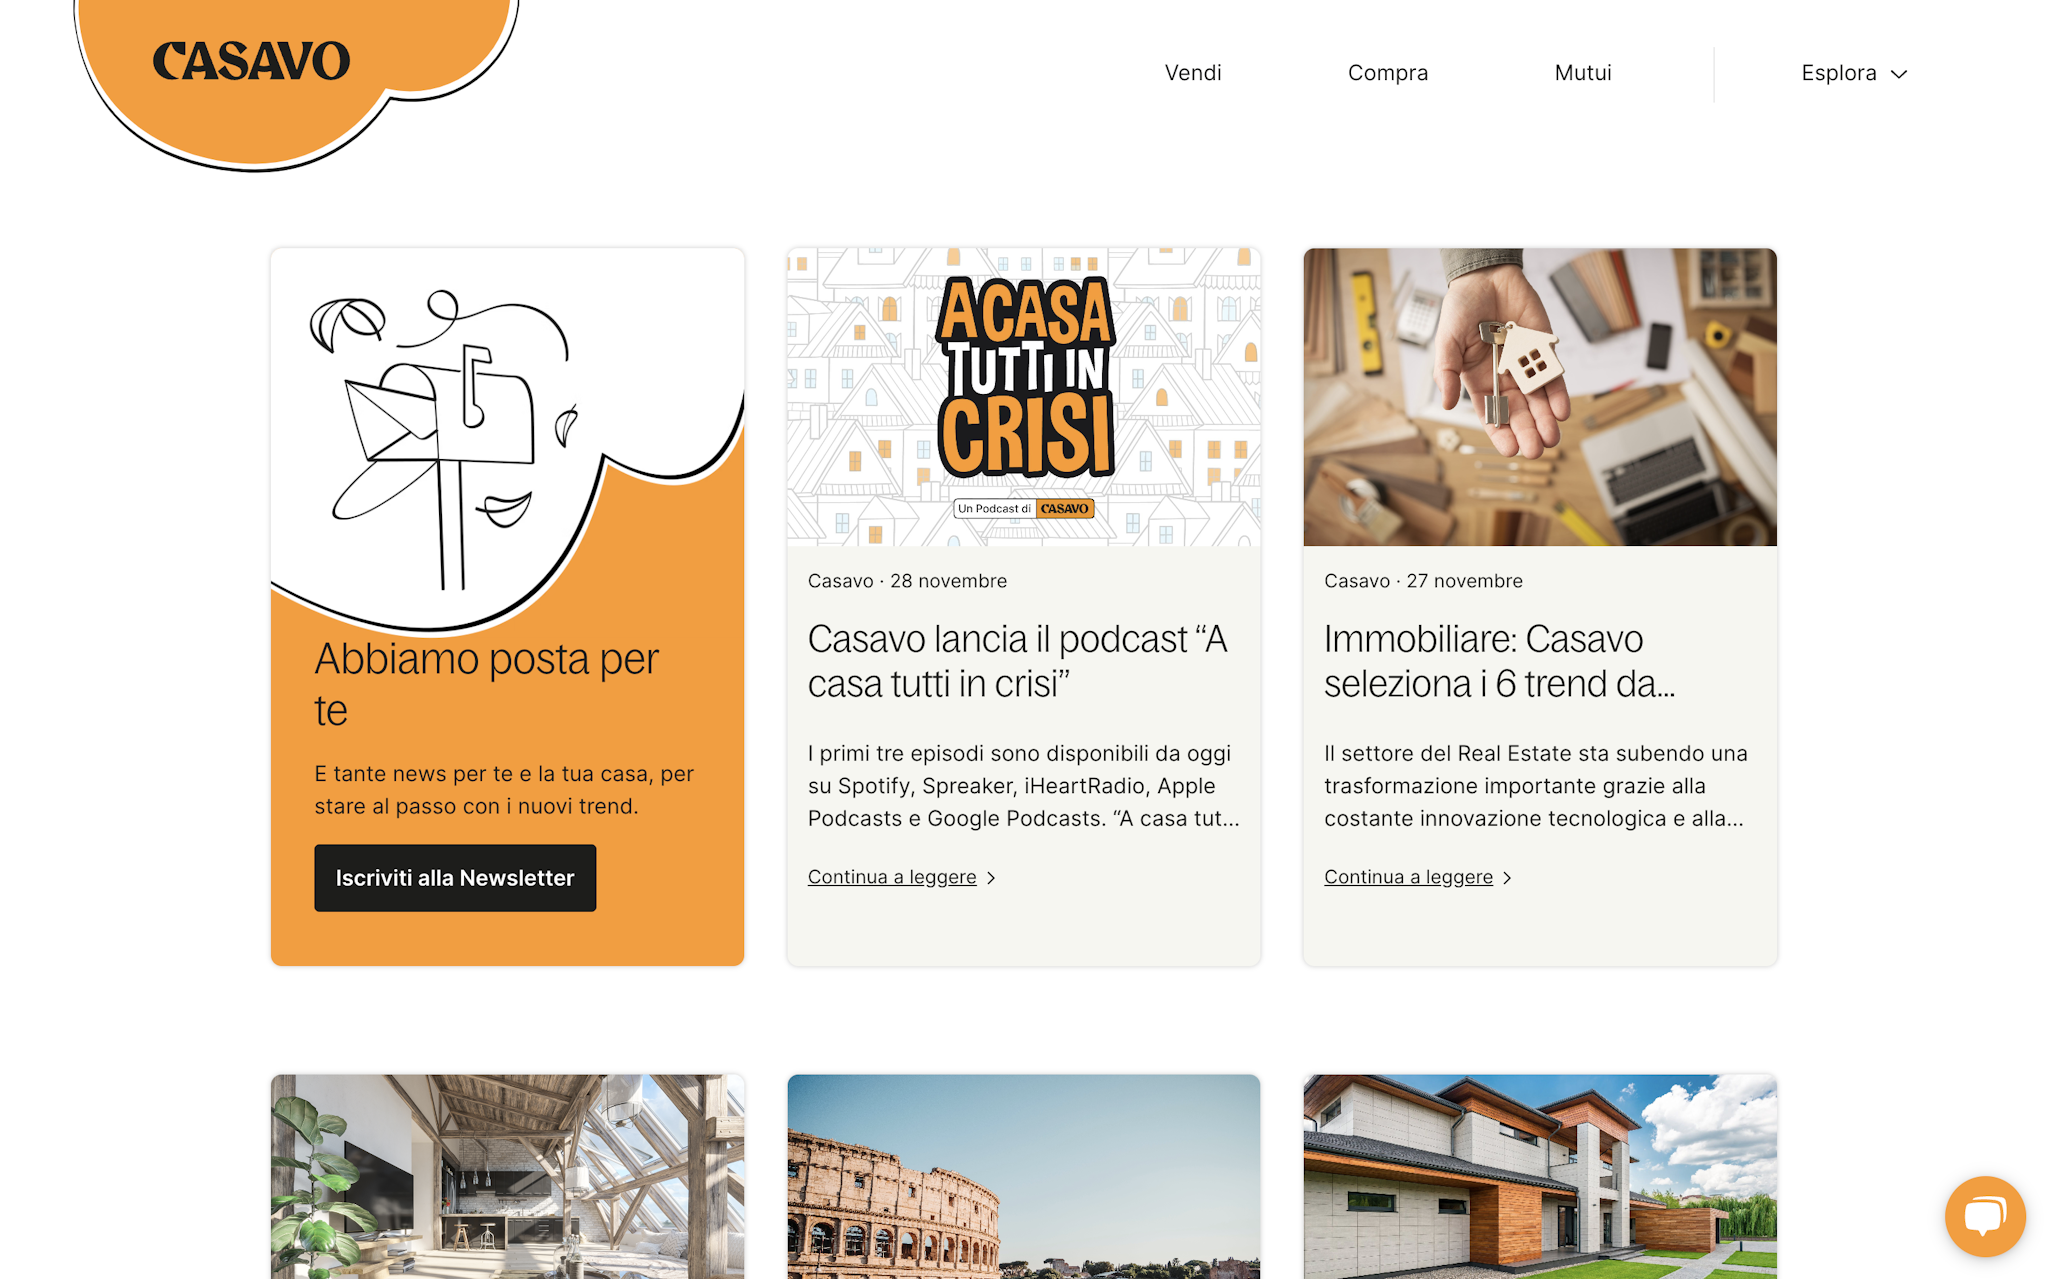 Casavo website made with React Bricks